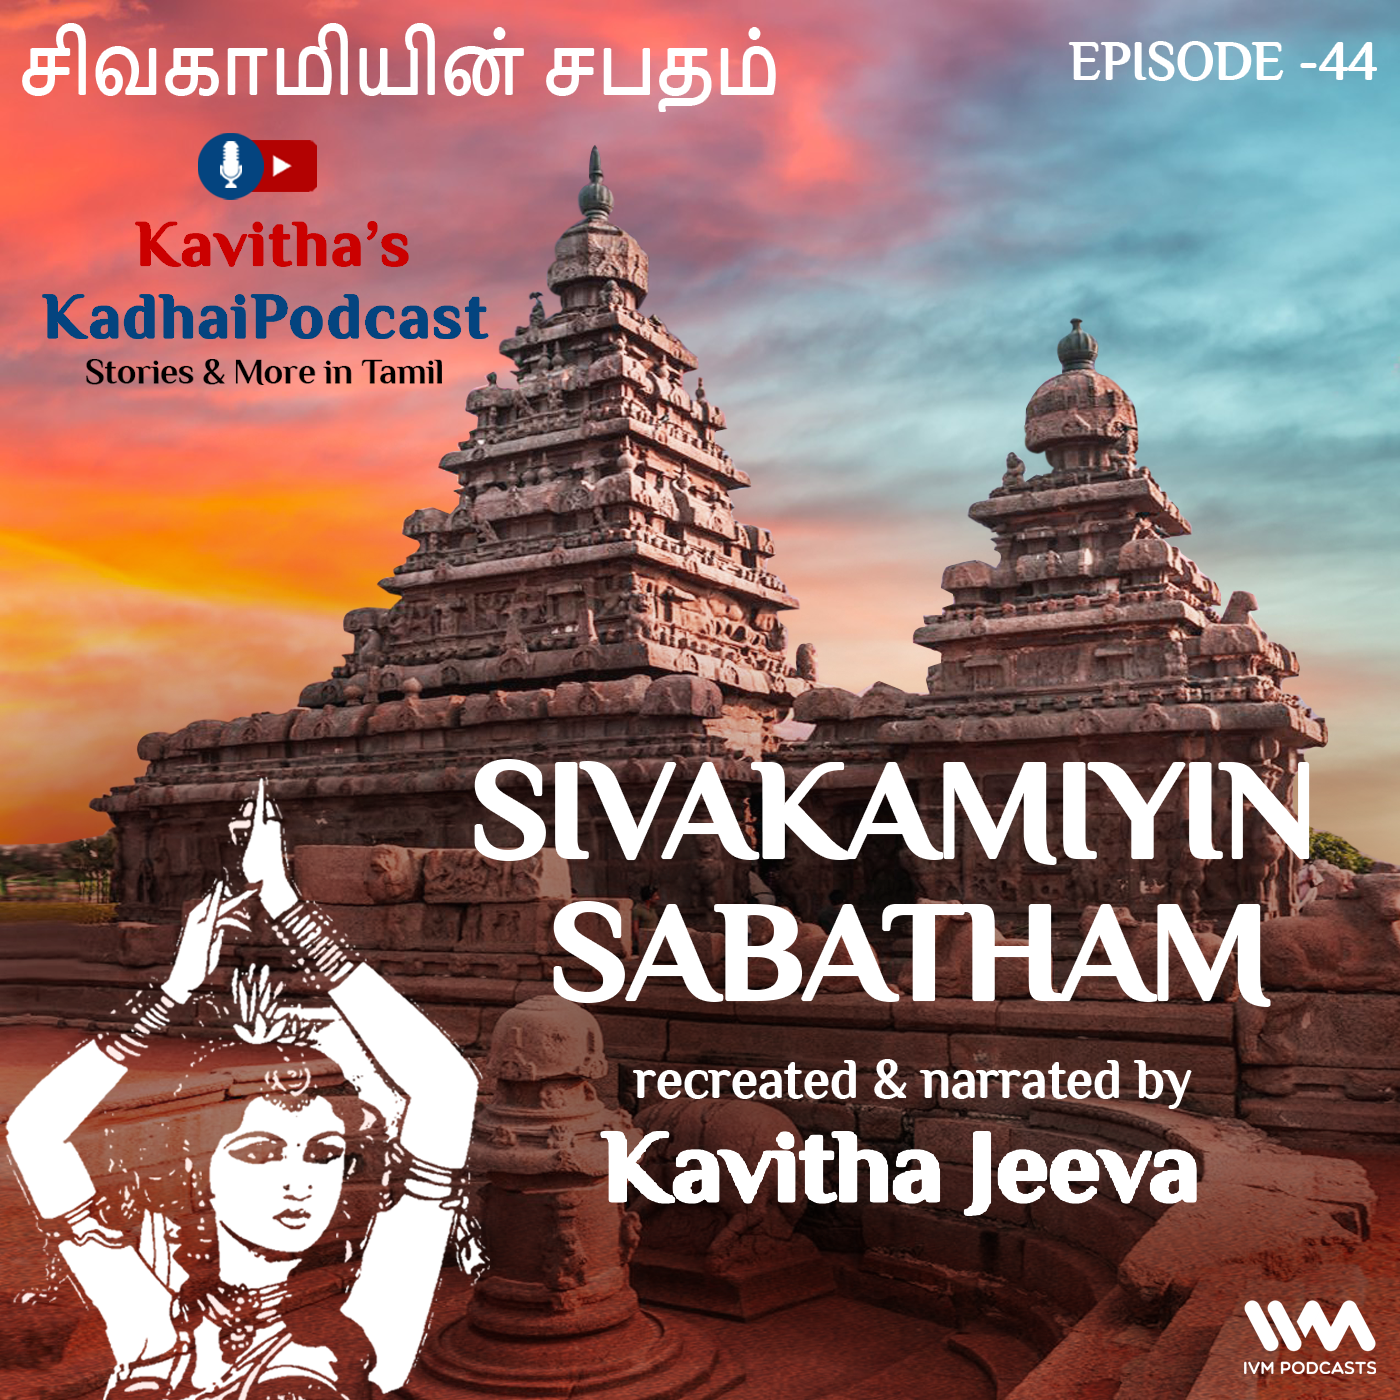 KadhaiPodcast's Sivakamiyin Sabatham - Episode # 44